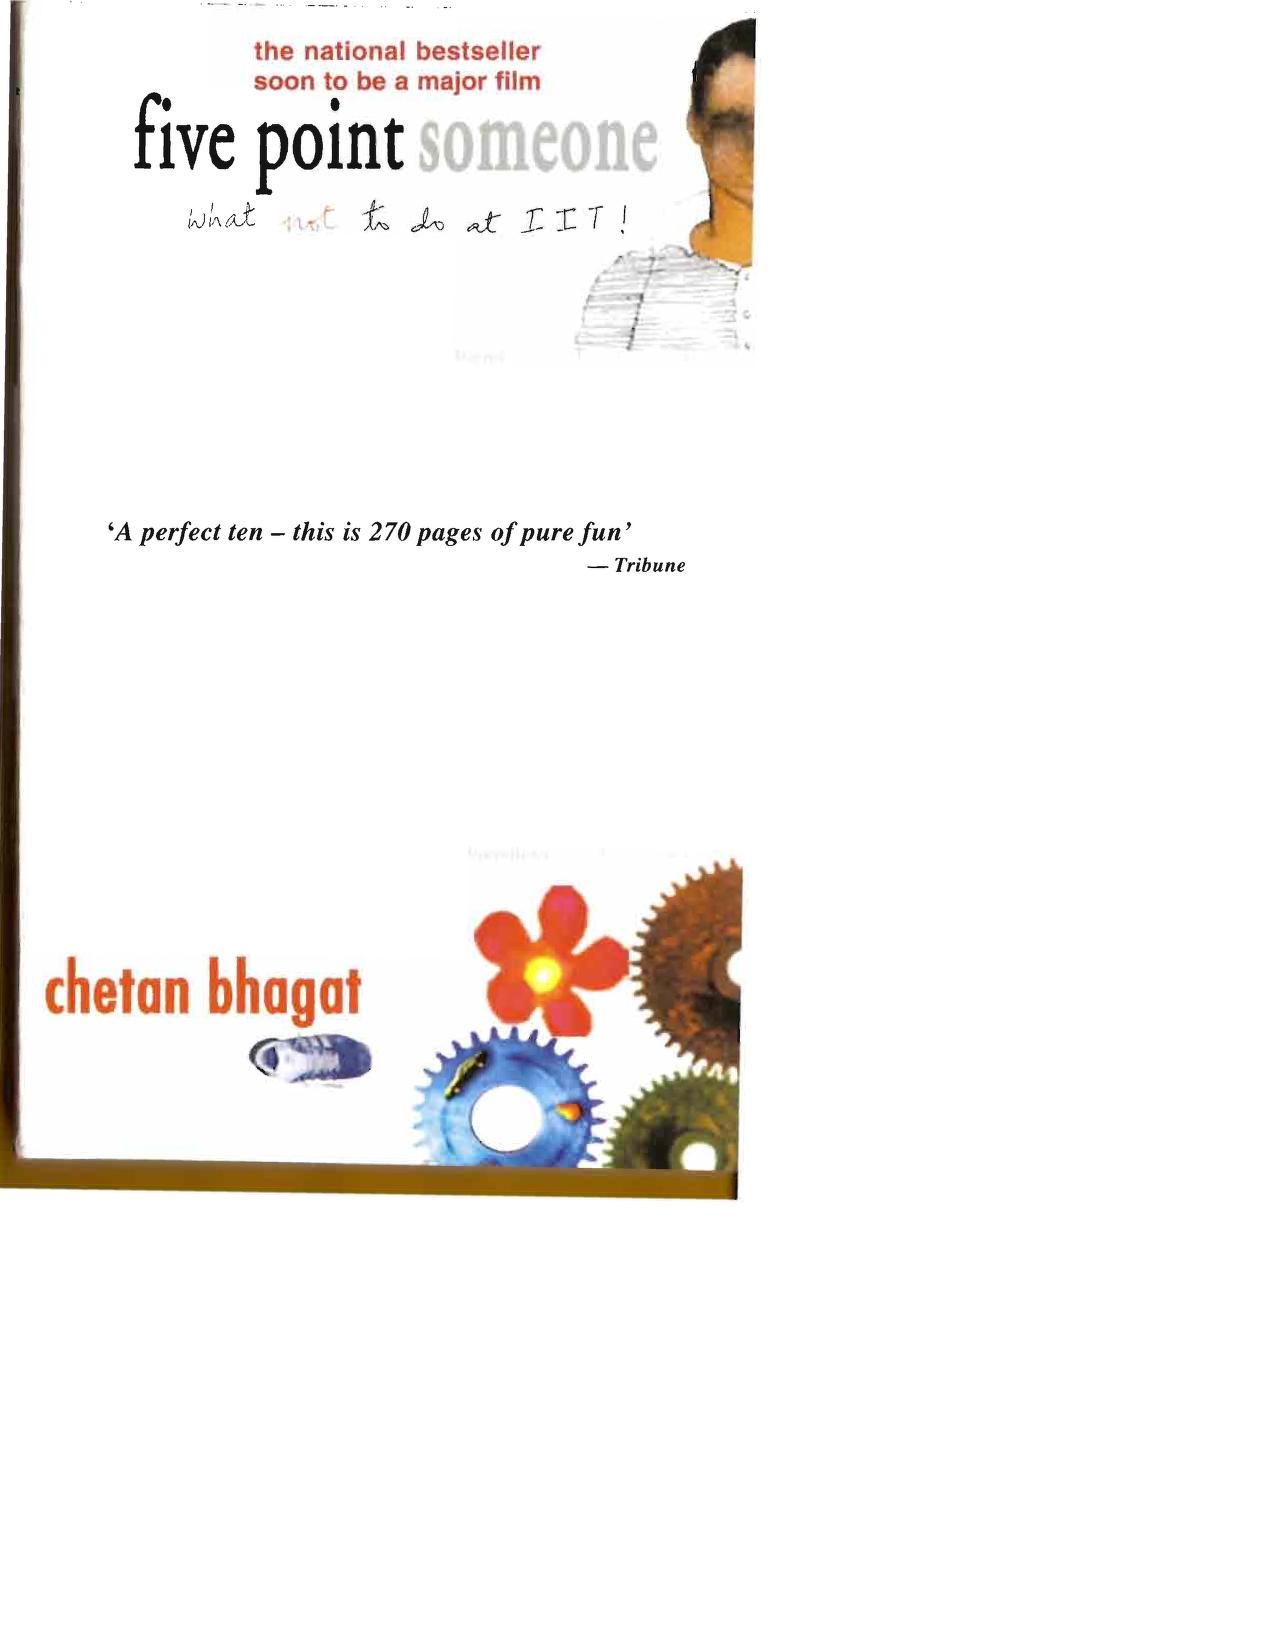 5 point someone by chetan bhagat pdf free download 0xc00007b download dll files windows 10